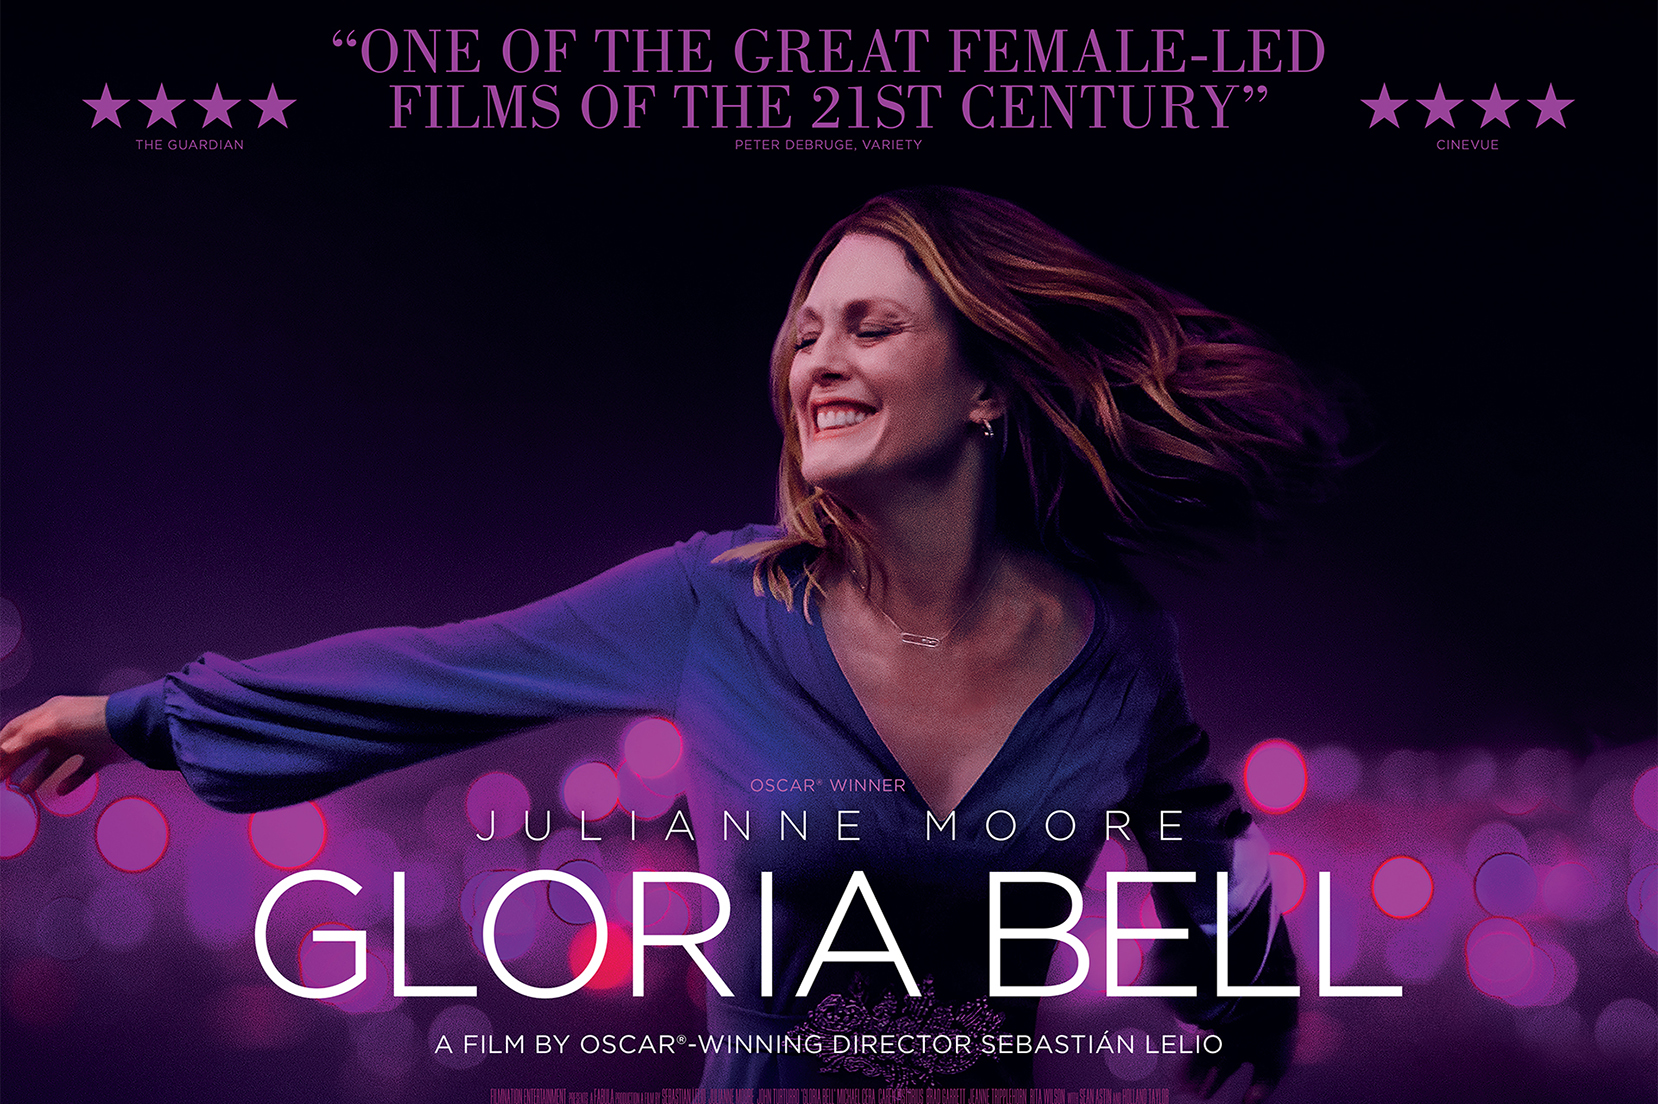 Locandina del film "Gloria Bell"